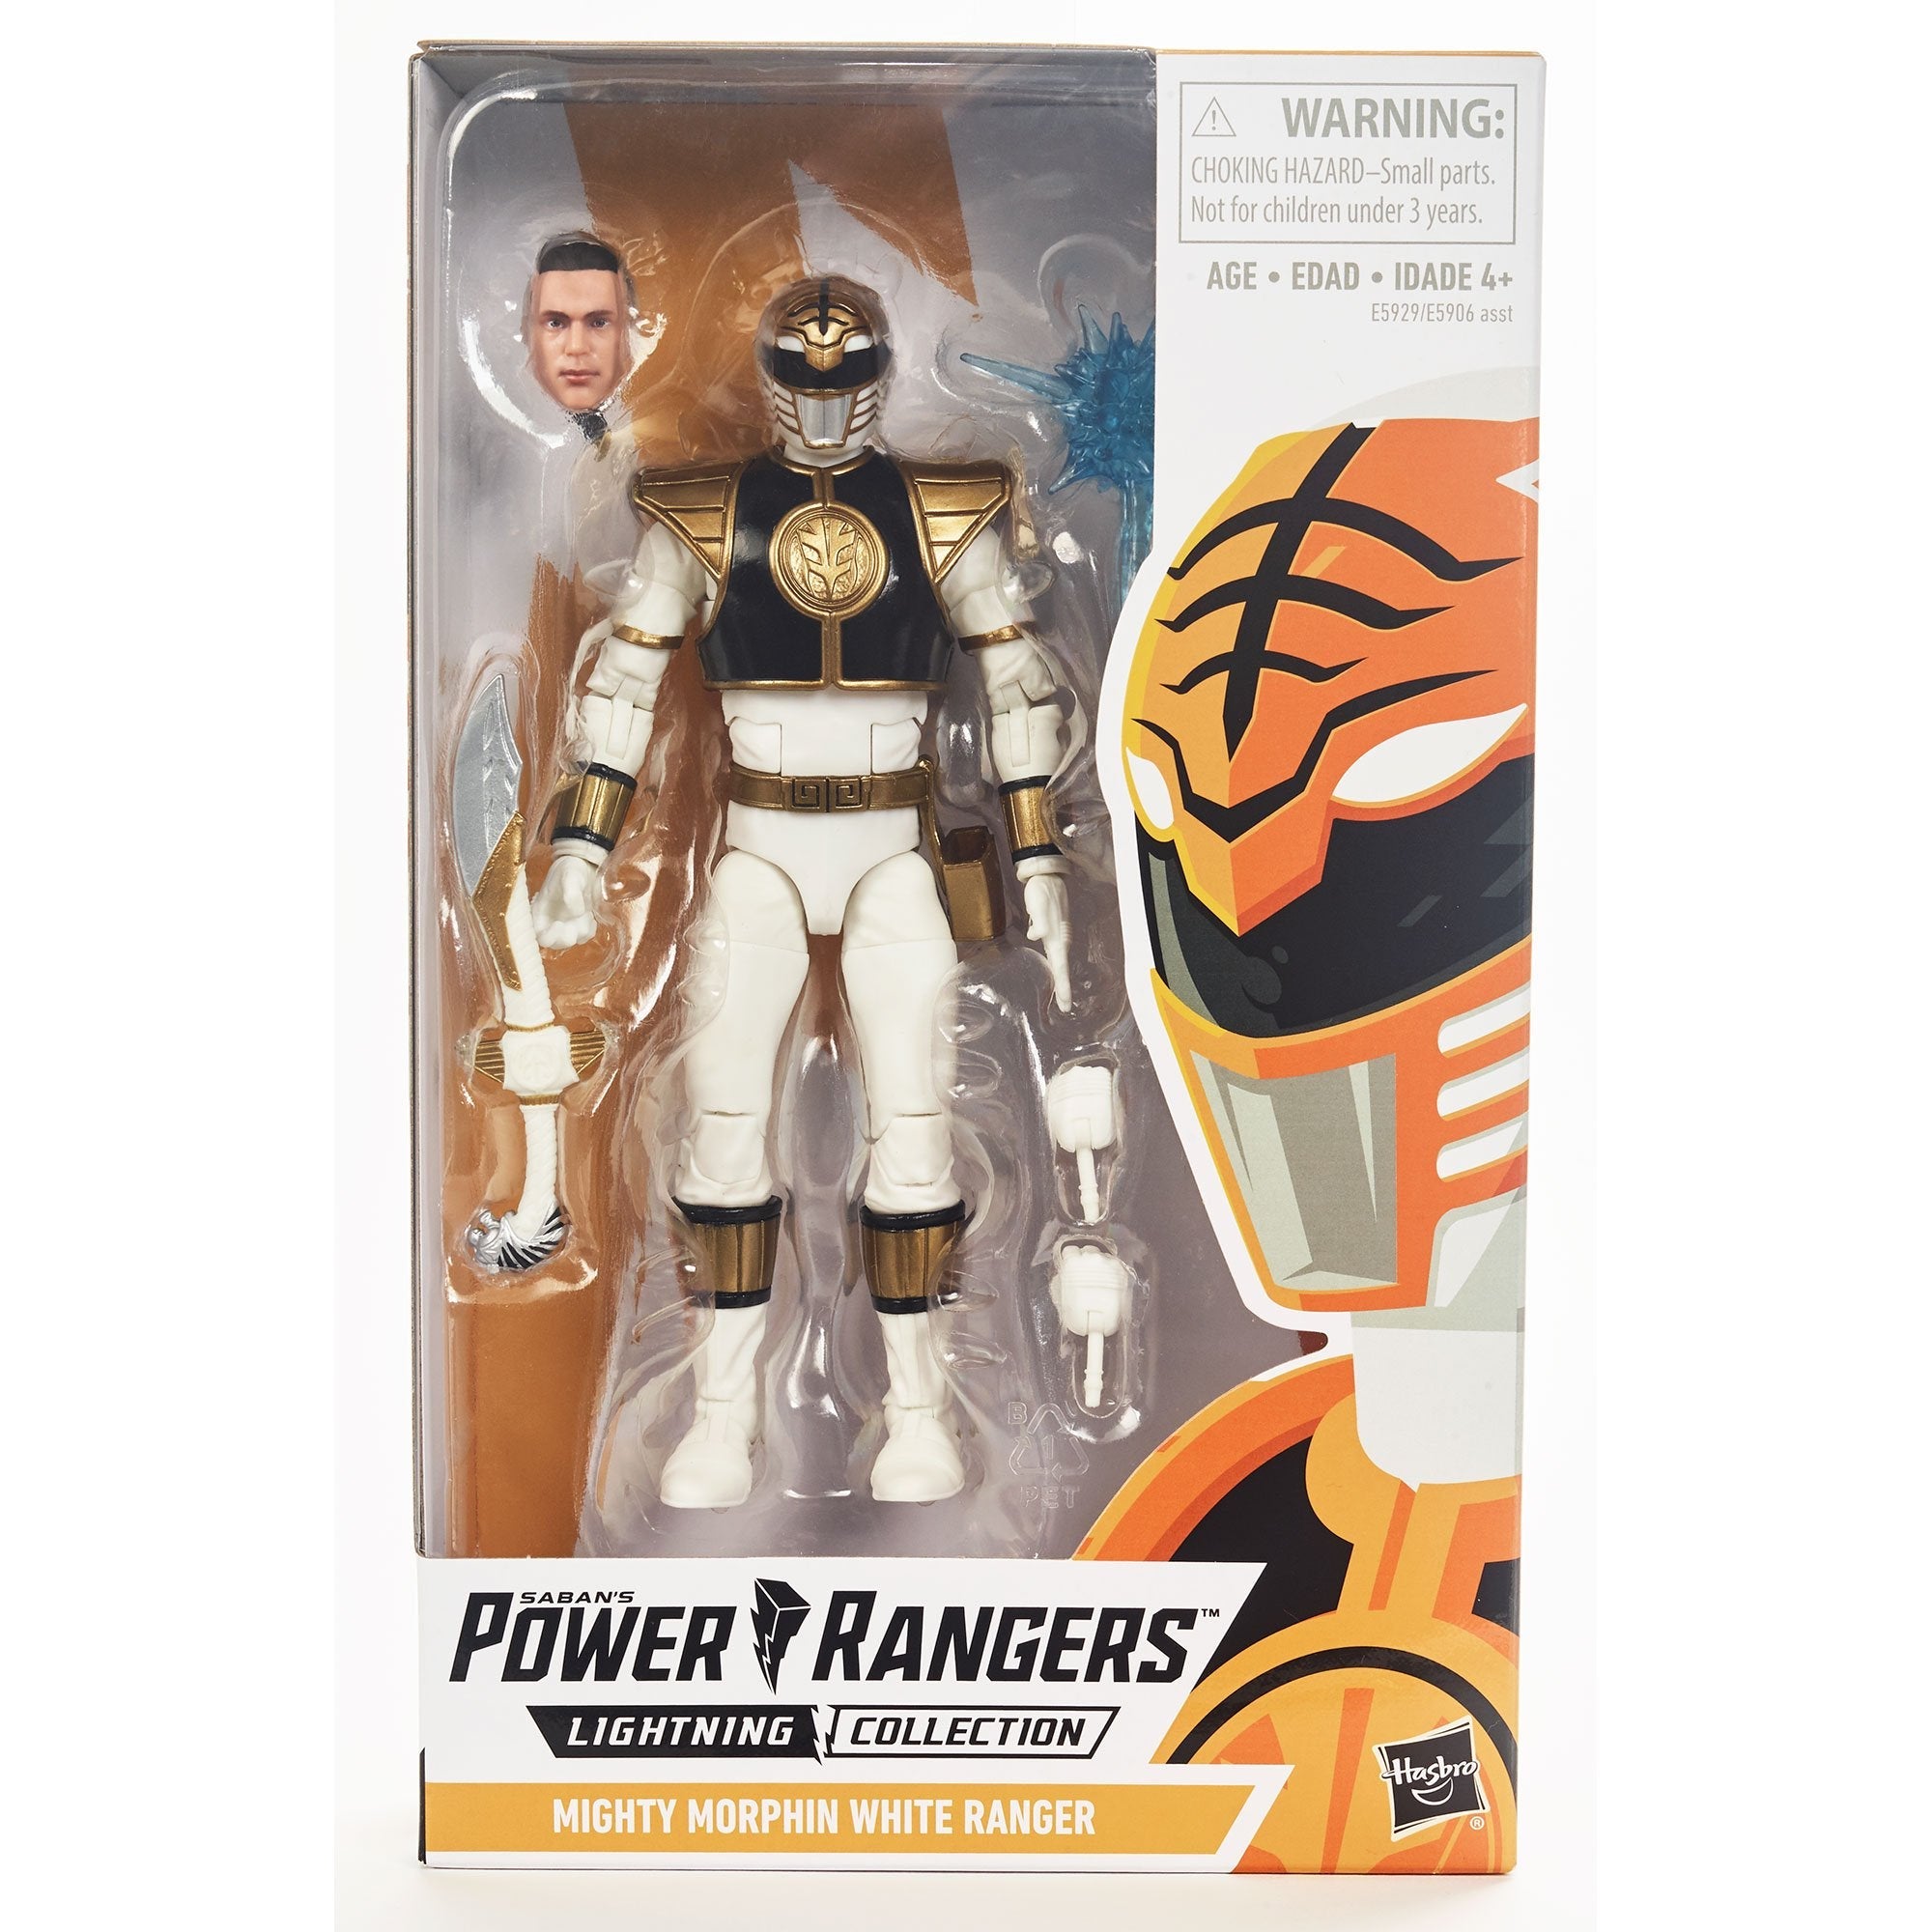 Power Rangers Lightning Collection Mighty Morphin White Ranger